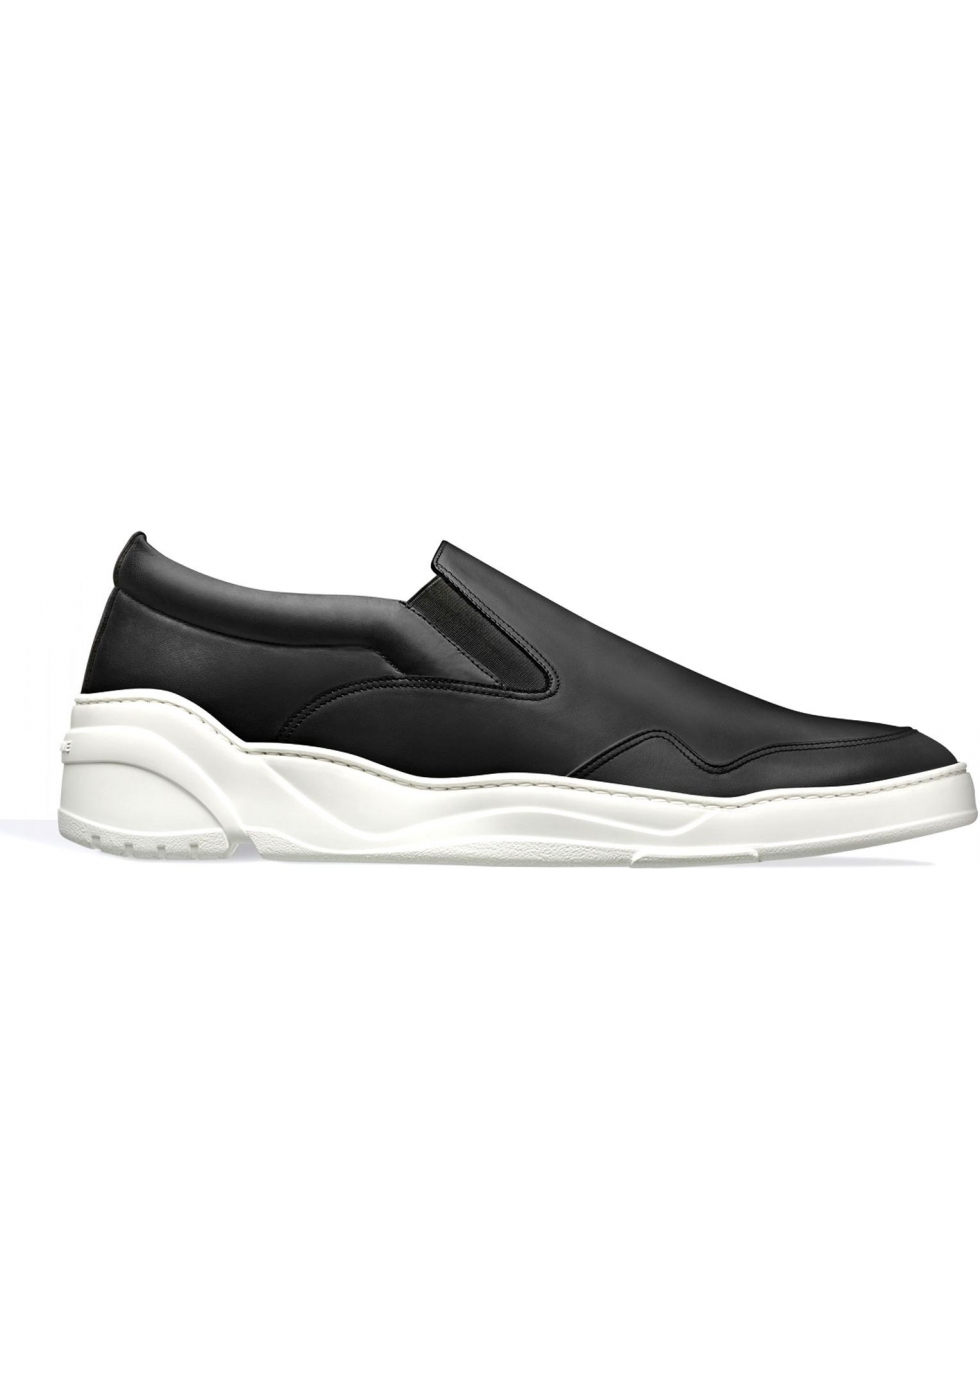 Dior men's black leather slip-ons sneaker shoes - Italian Boutique